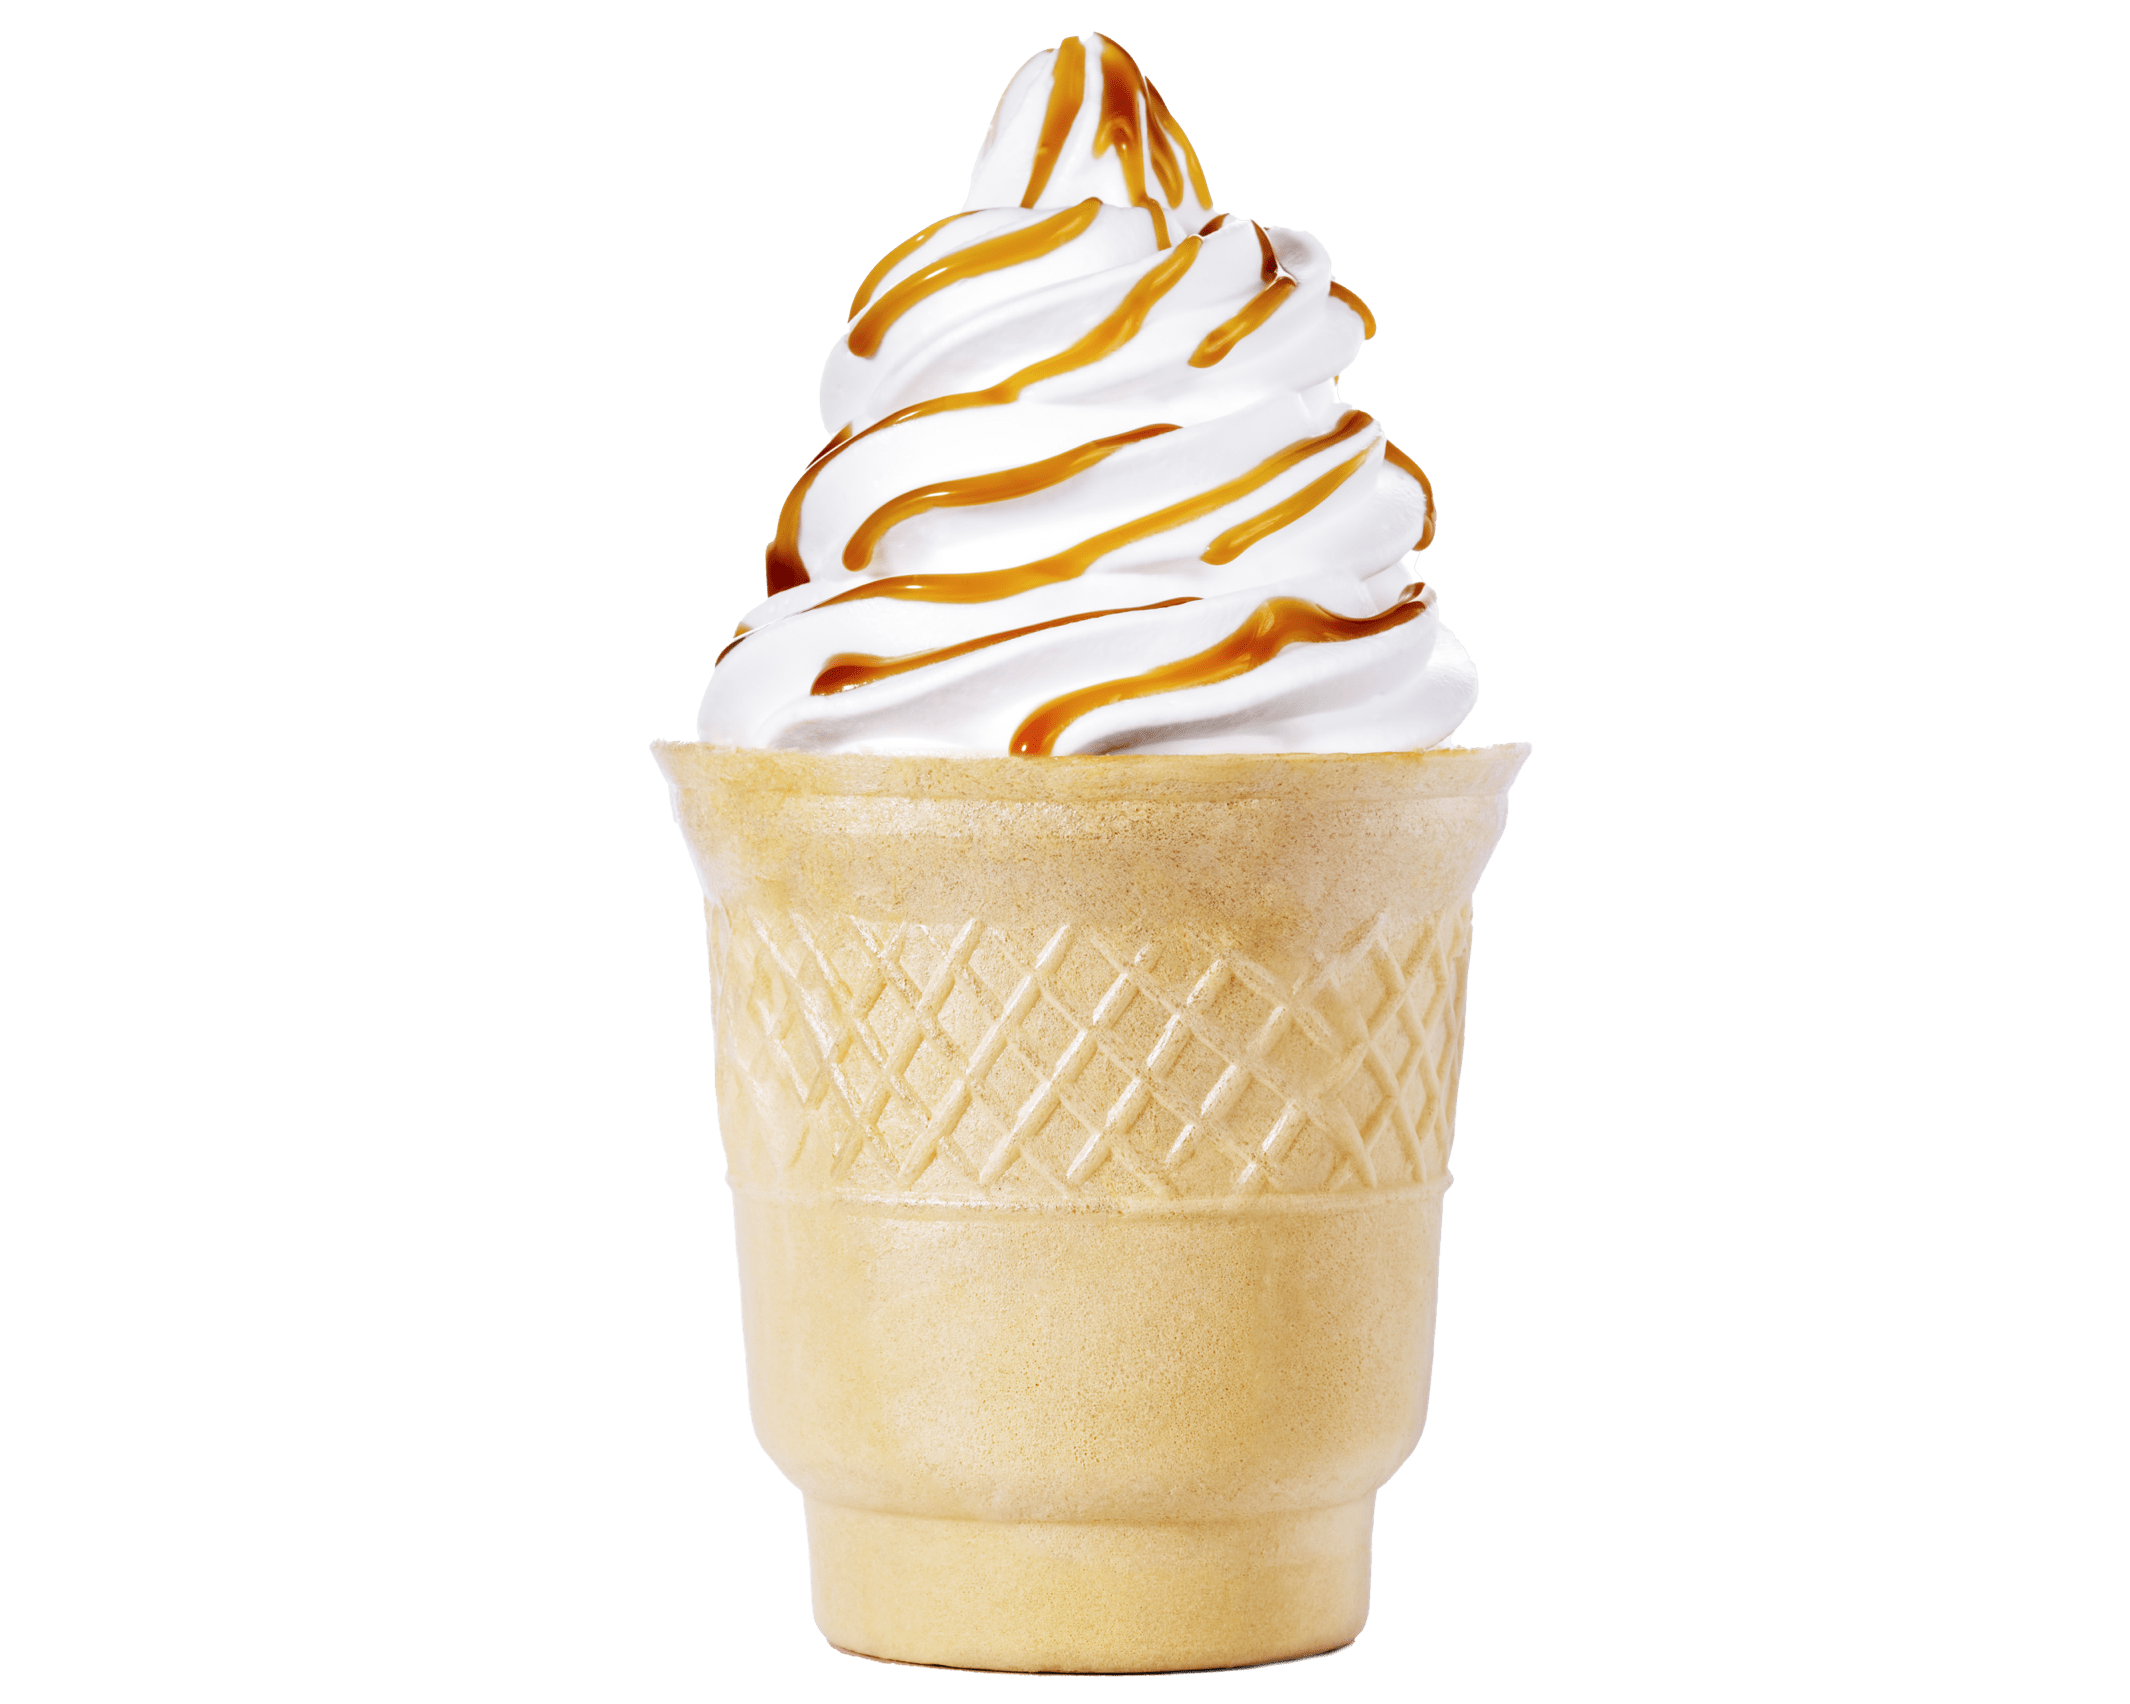 Soft serve Vanilla ice cream on a cone with caramel sauce drizzle